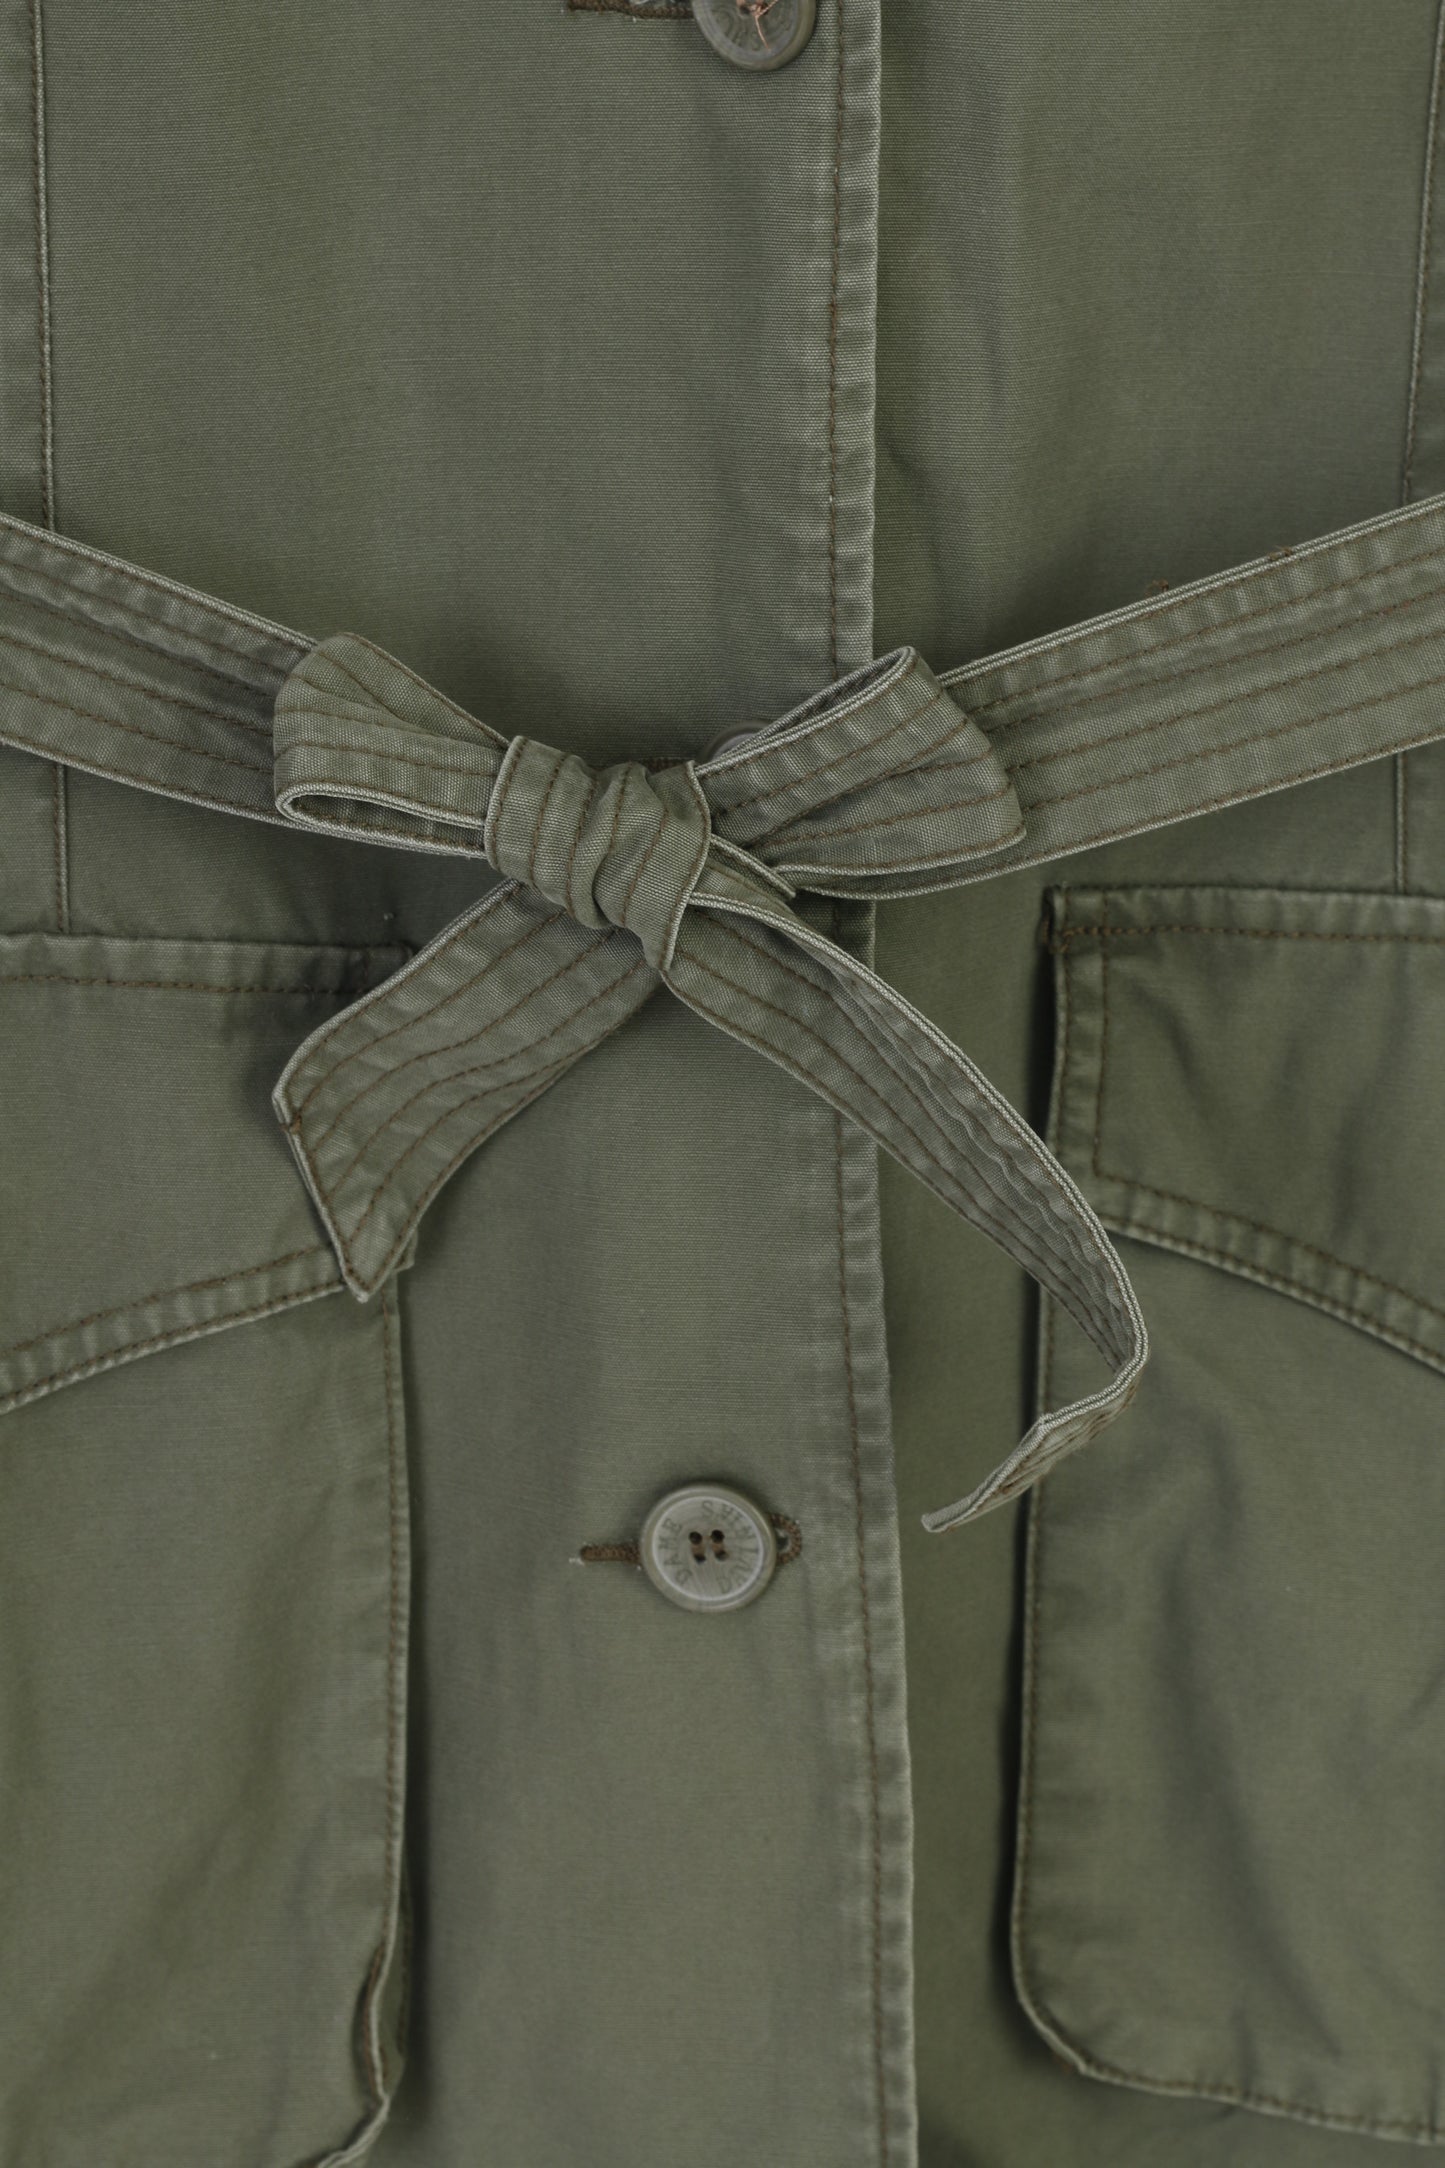 H&M Girls 152 cm 11 Age Coat Green Cotton Single Breasted Belt Pockets Collar Vintage Jacket